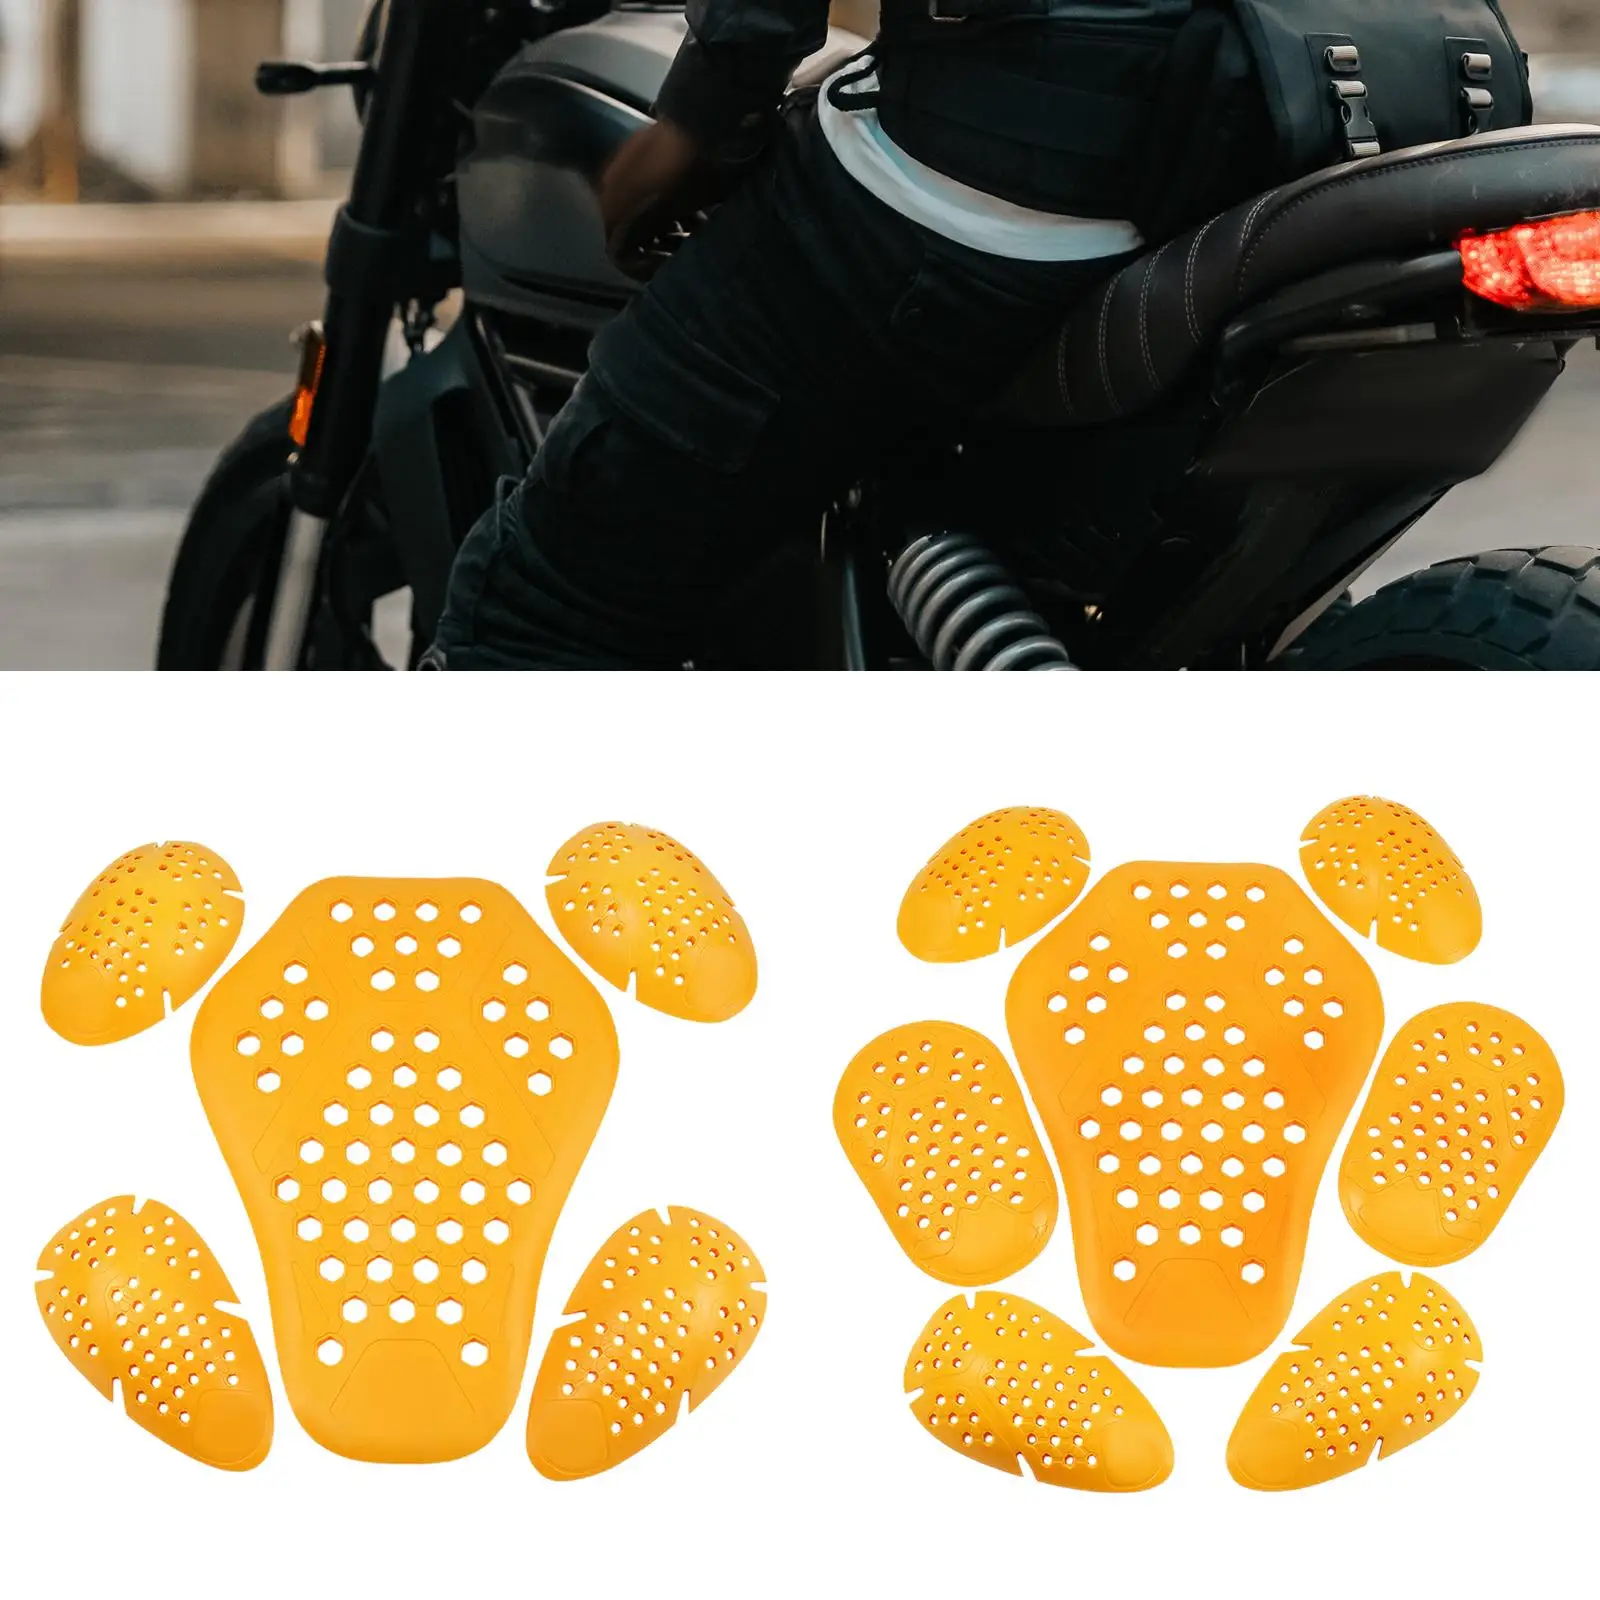 Motorcycle Jacket Armor Protective Gear  Set Motorbike 